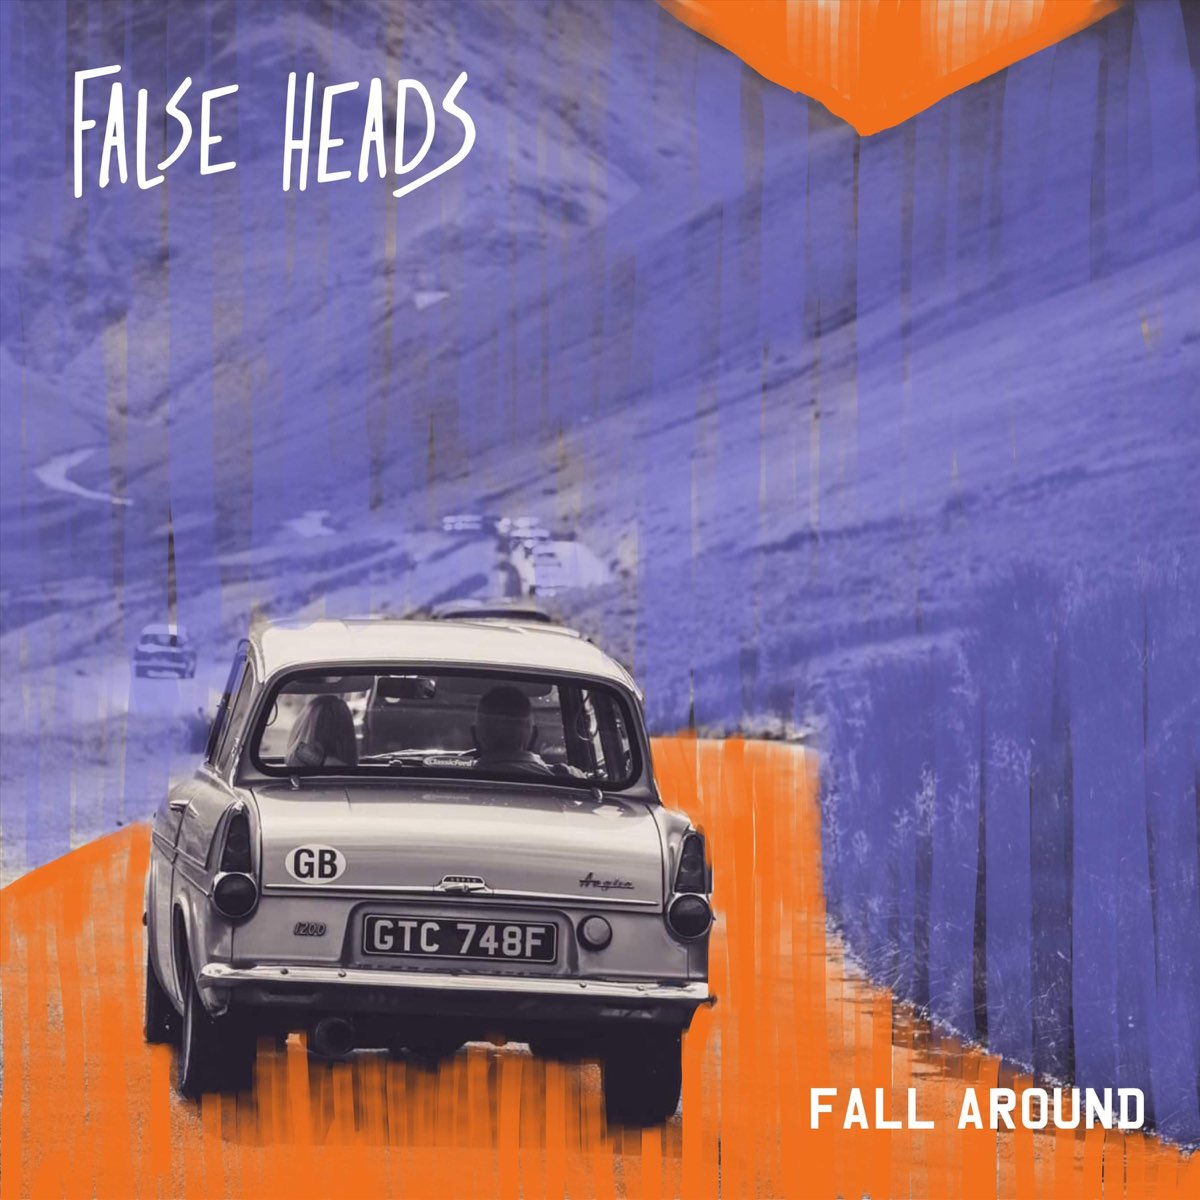 Fall around. False heads Band.